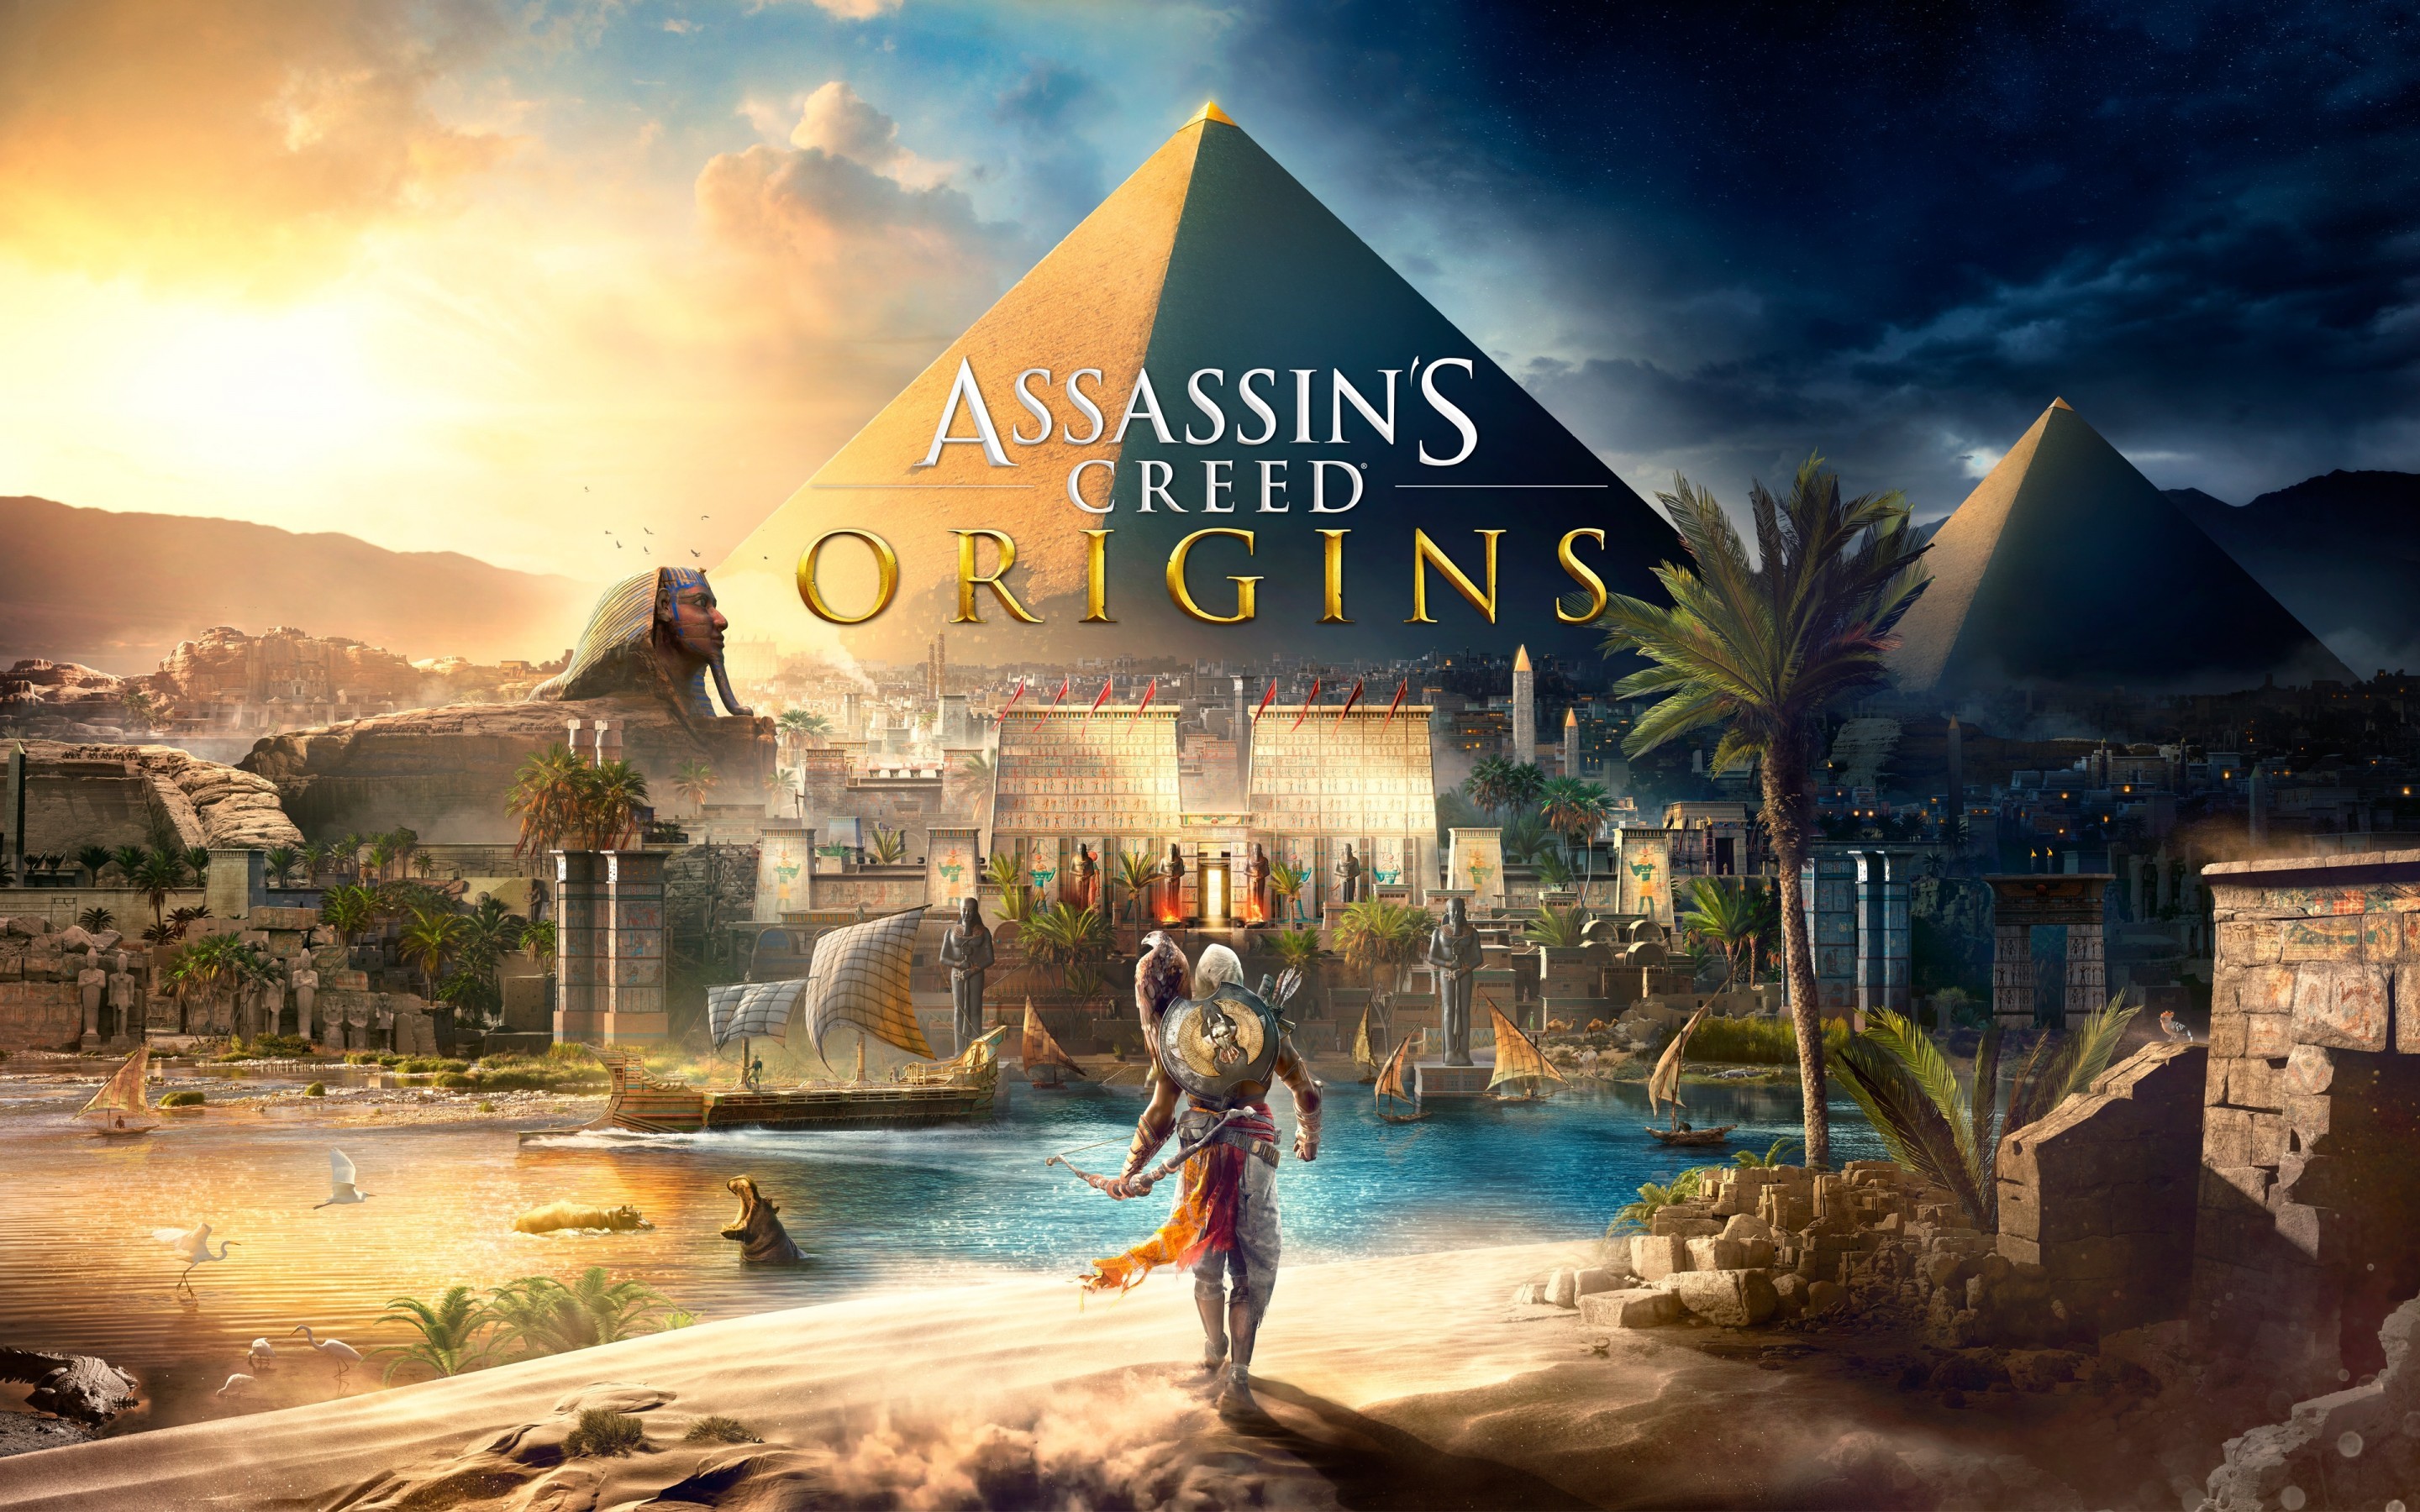 Download 2880x1800 Assassin's Creed Origin, Pyramid, Artwork